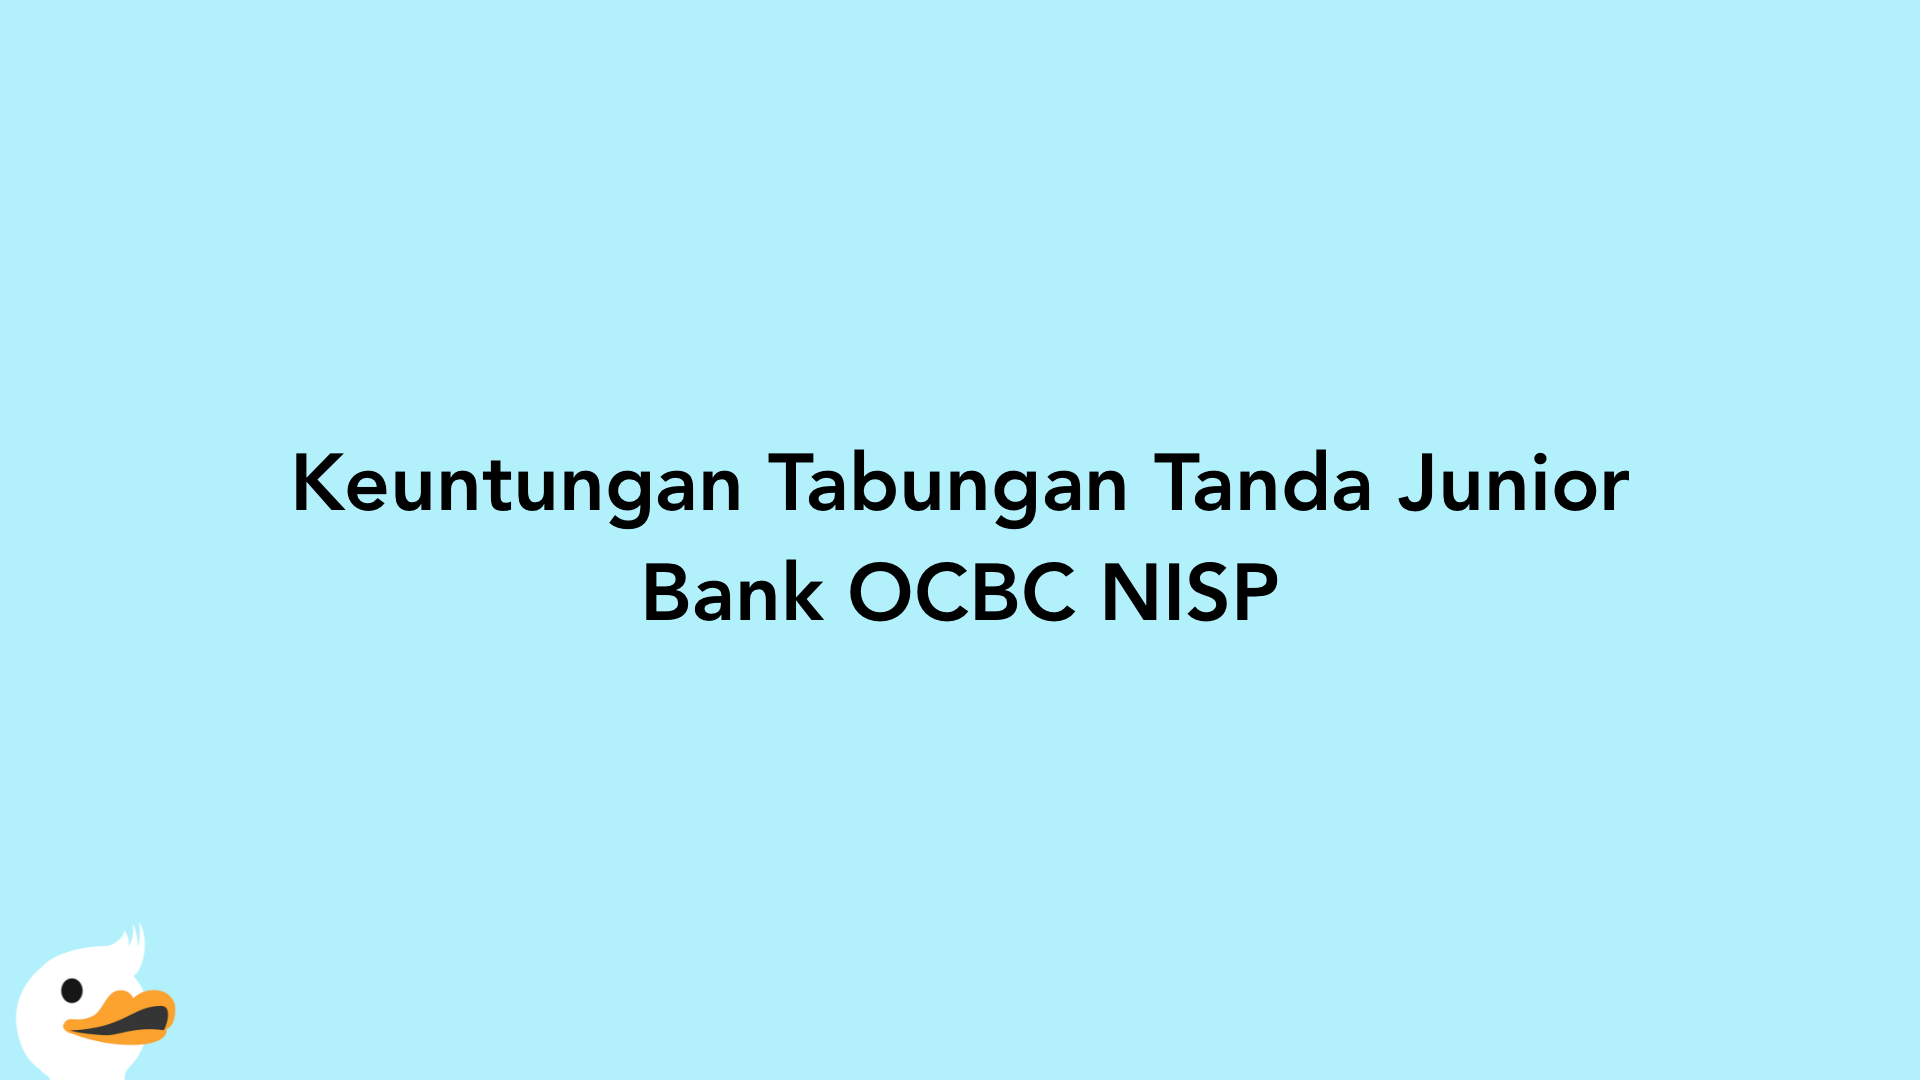 Keuntungan Tabungan Tanda Junior Bank OCBC NISP